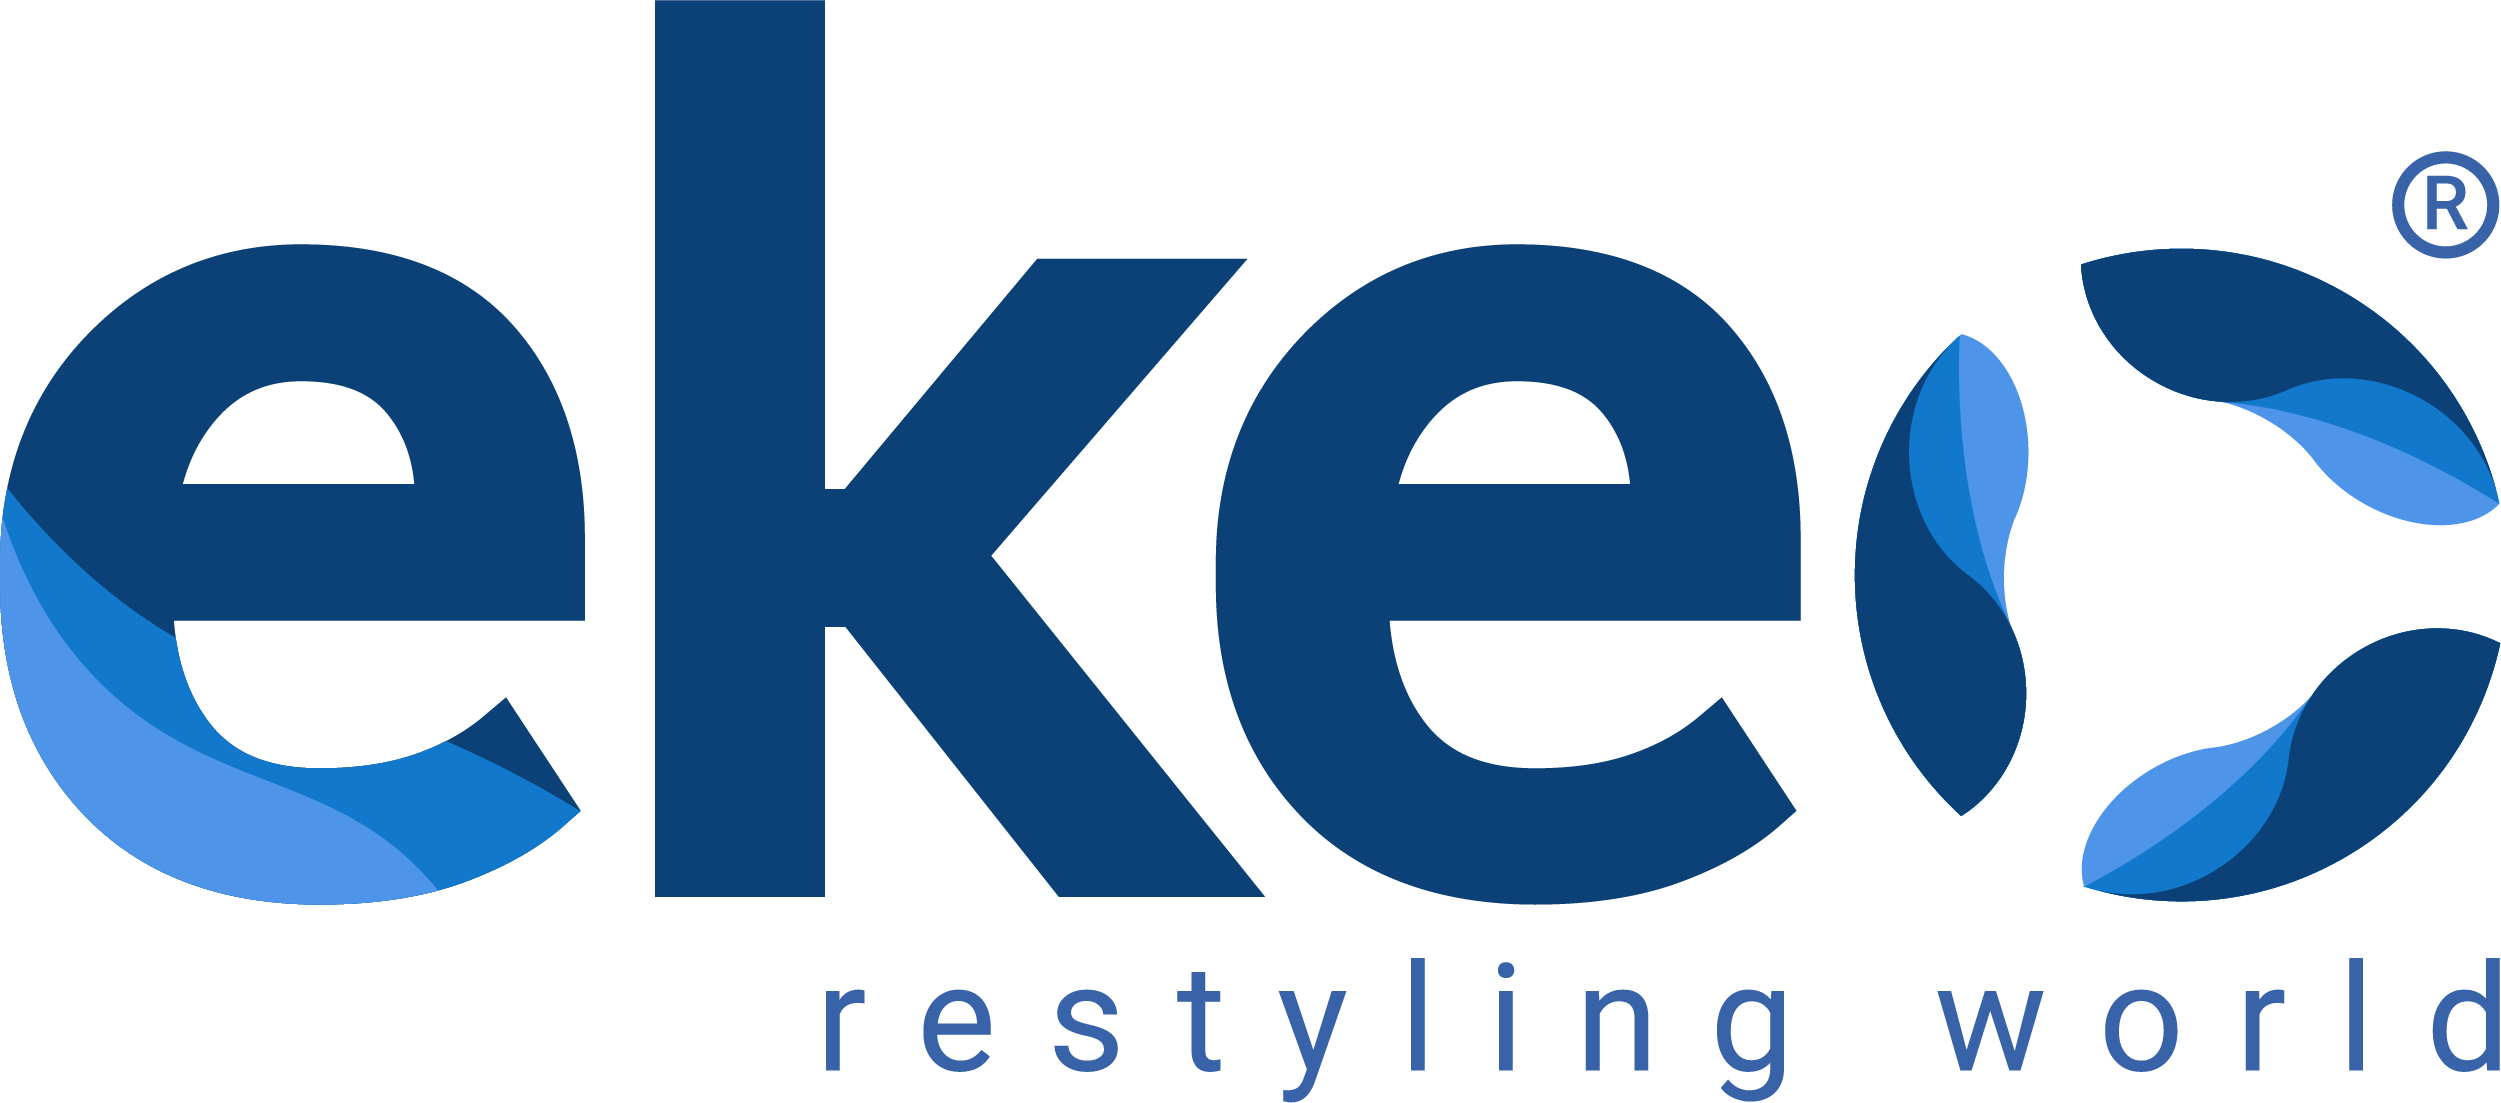 Logo-Ekeo